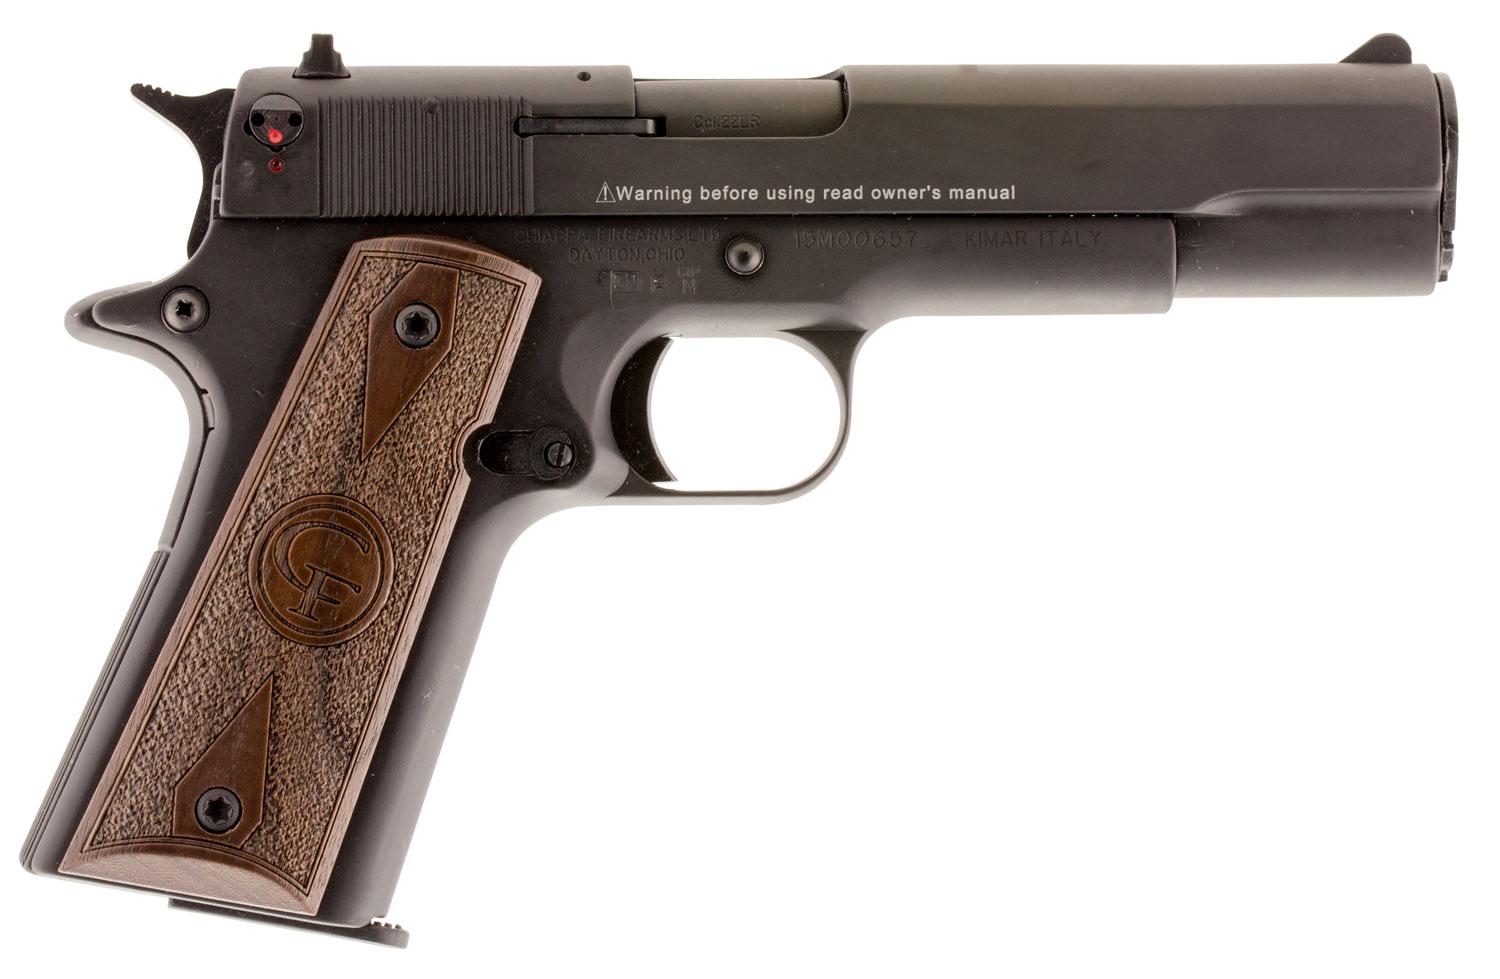 Chiappa 1911 22 Standard Pistol 401038, 22 Long Rifle, 5", Wood Grips, Black Finish, 10 Rds